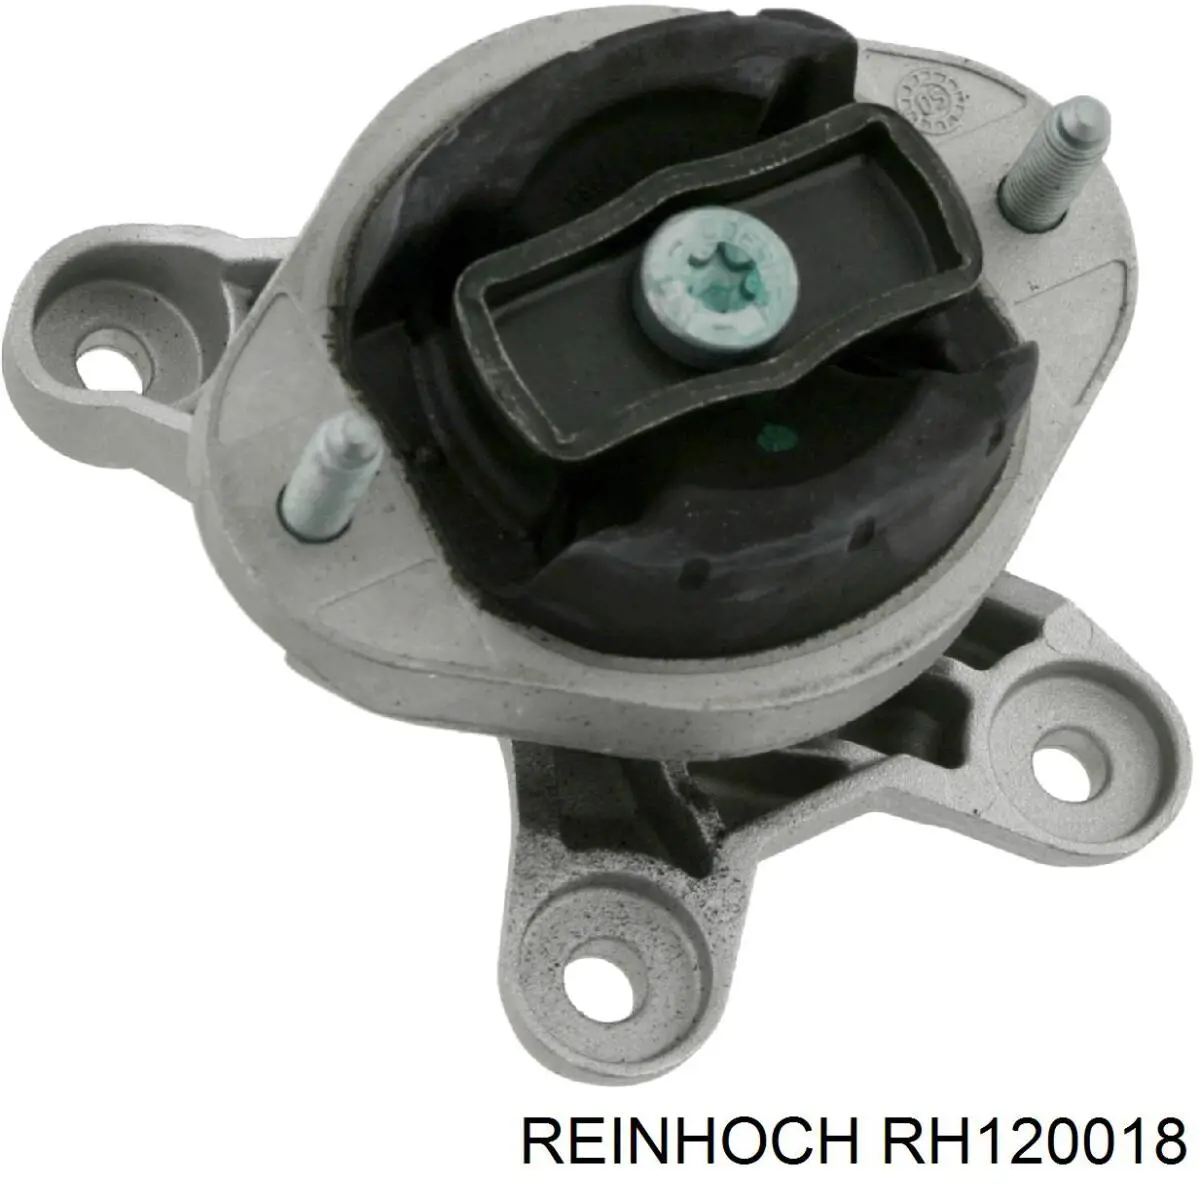 RH120018 Reinhoch подушка трансмиссии (опора коробки передач)